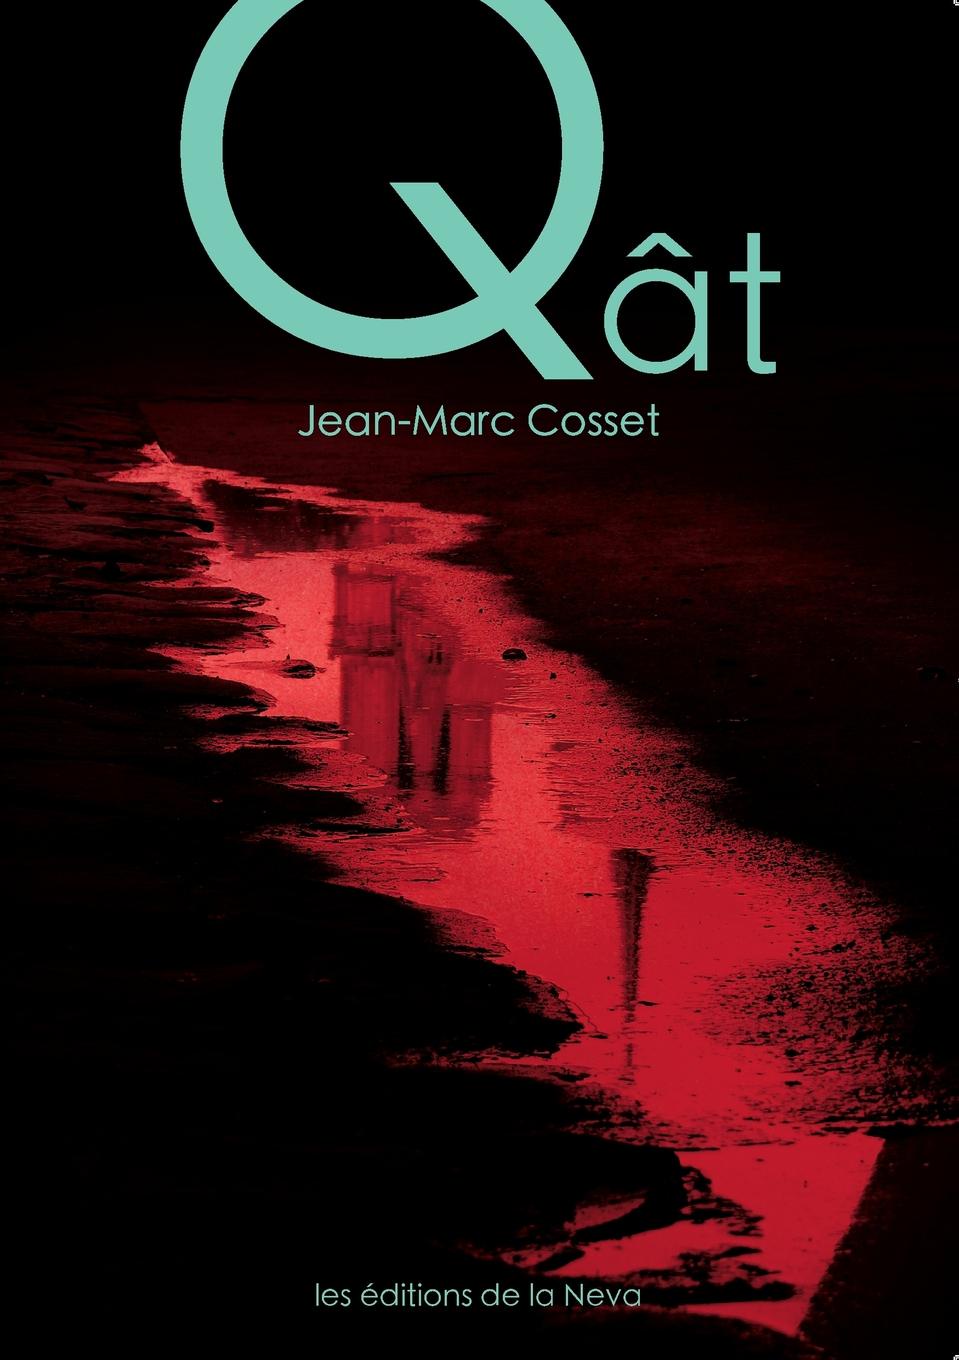 Jean-Marc Cosset Qat